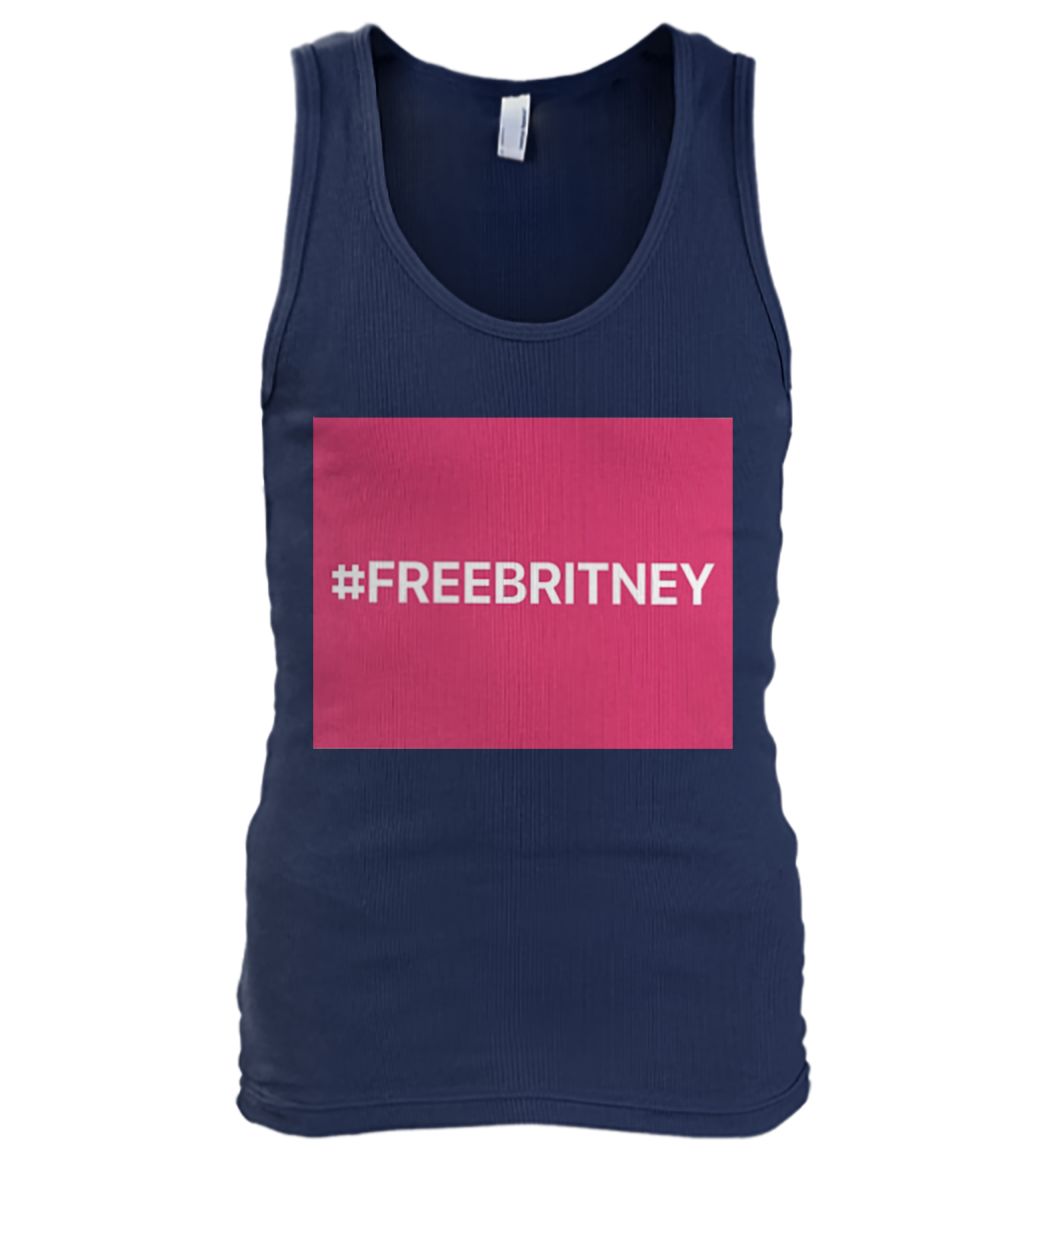 Free britney #freebritney men's tank top